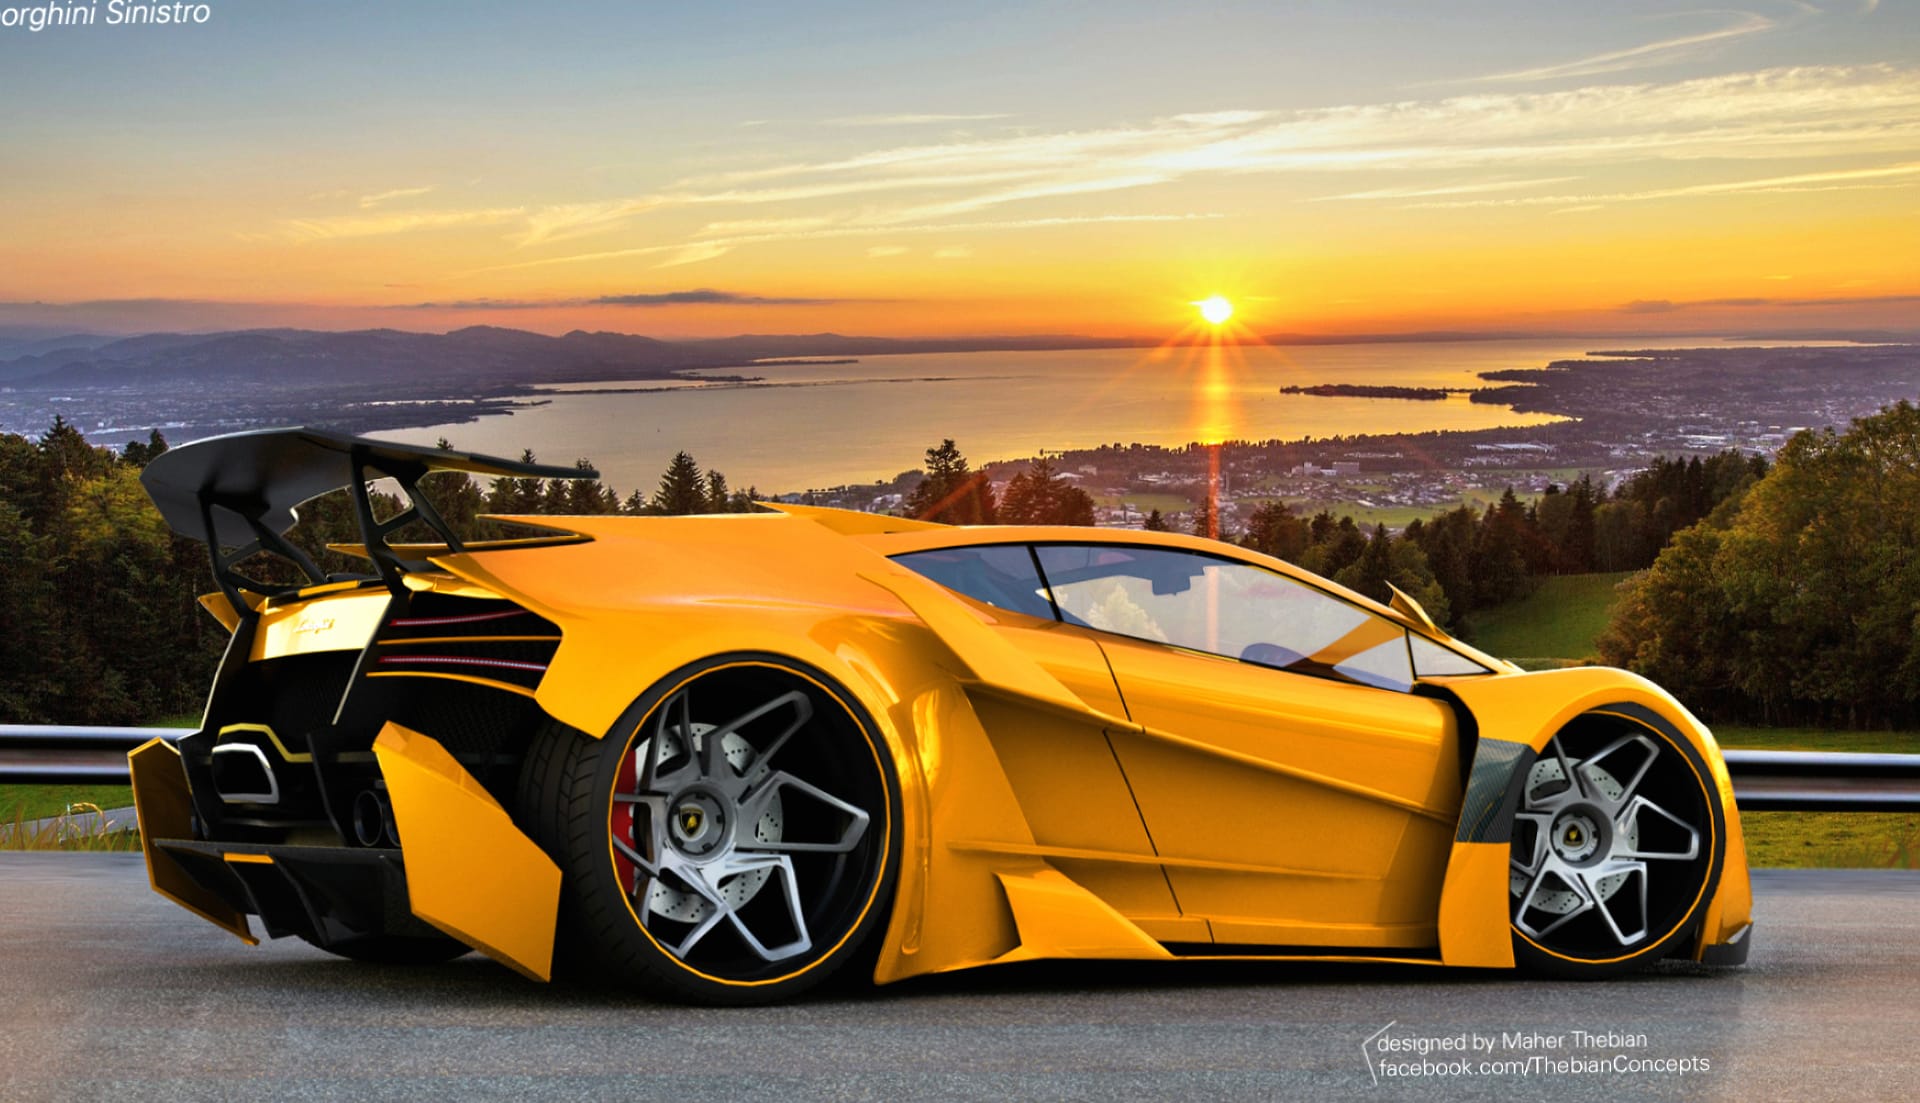 Lamborghini Sinistro Concept at 1600 x 1200 size wallpapers HD quality